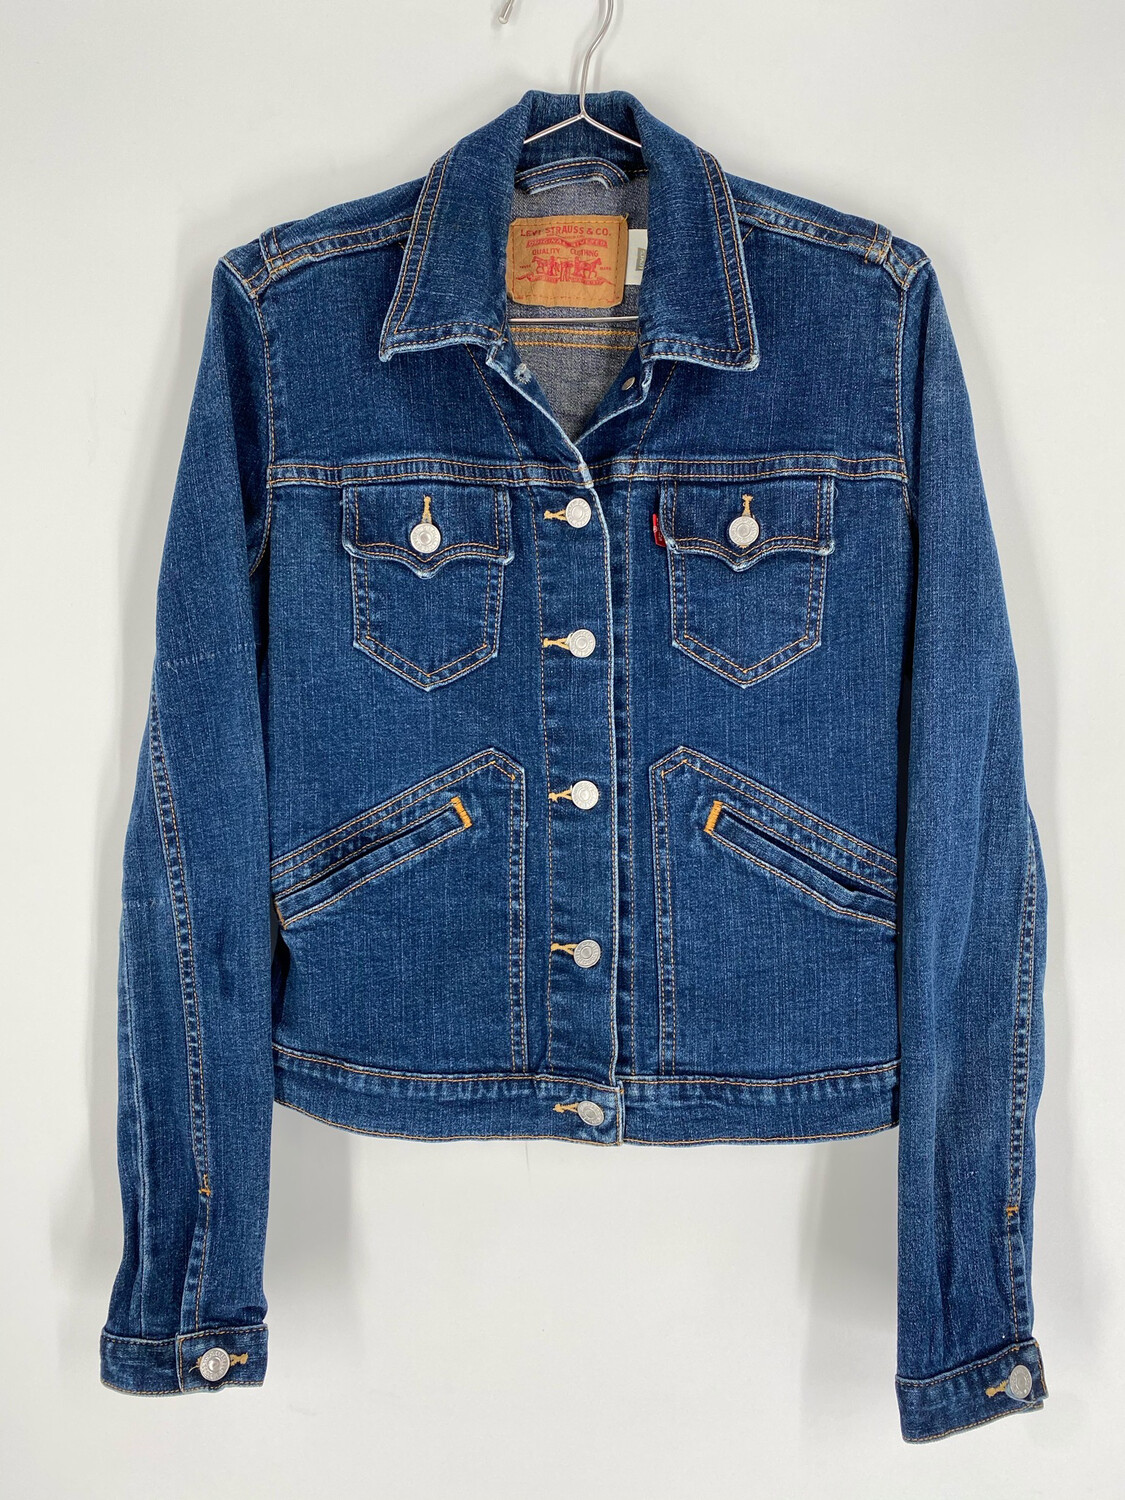 Levi’s Fitted Vintage Denim Jacket Size S